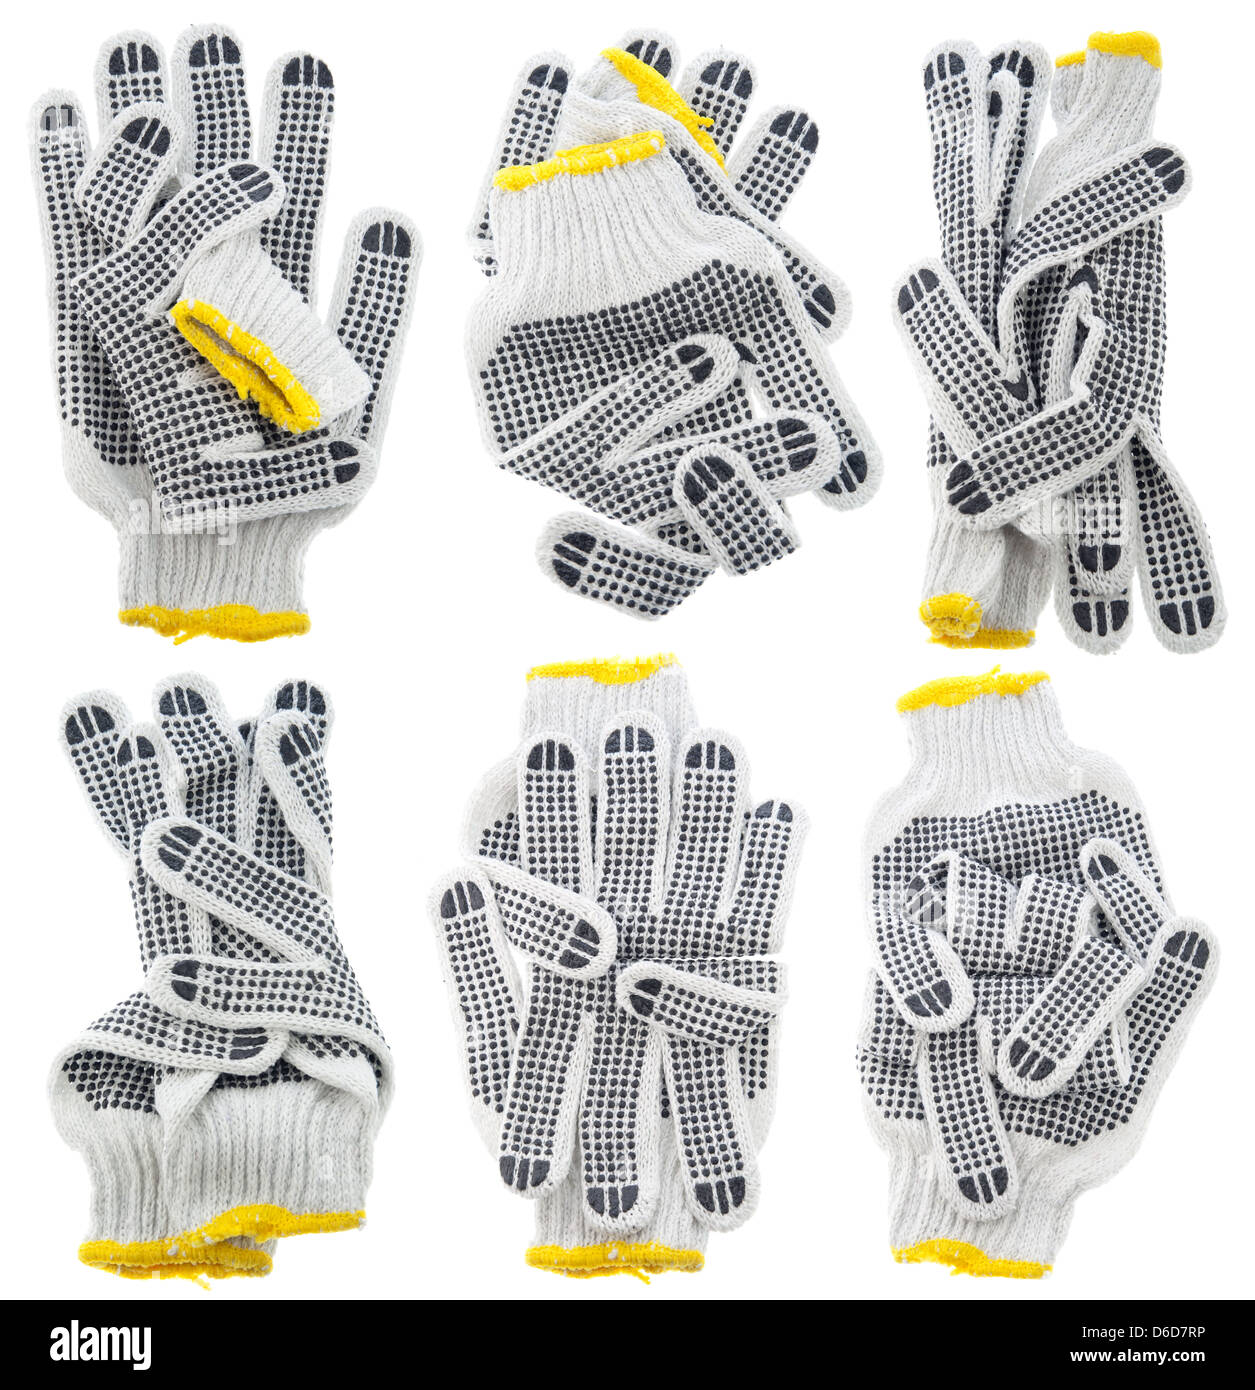 Working gloves, secret magic gestures set Stock Photo